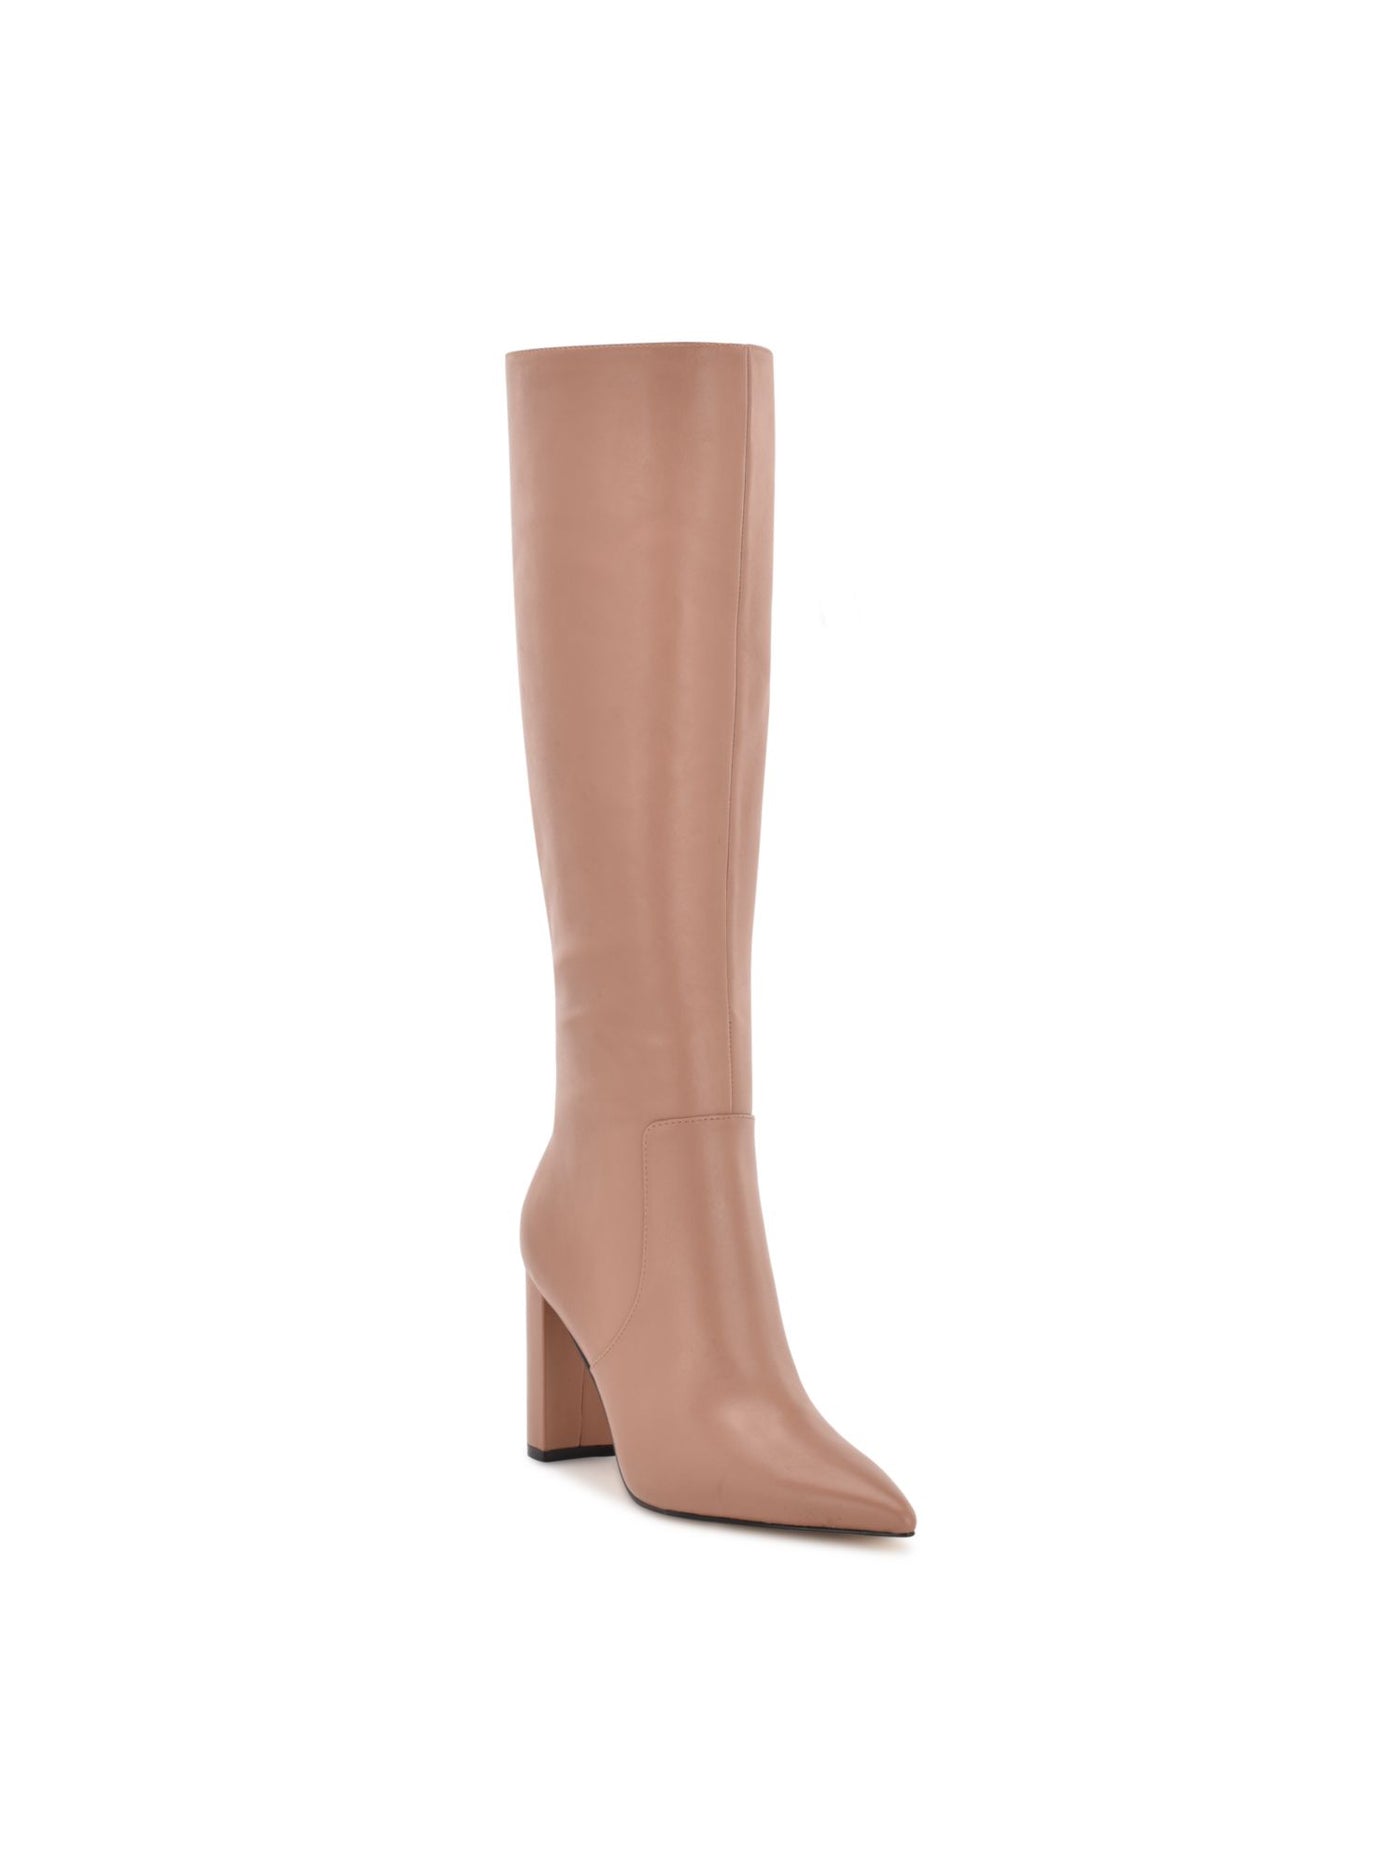 NINE WEST Womens Beige Padded Goring Danee Pointed Toe Block Heel Zip-Up Leather Dress Boots 9.5 M